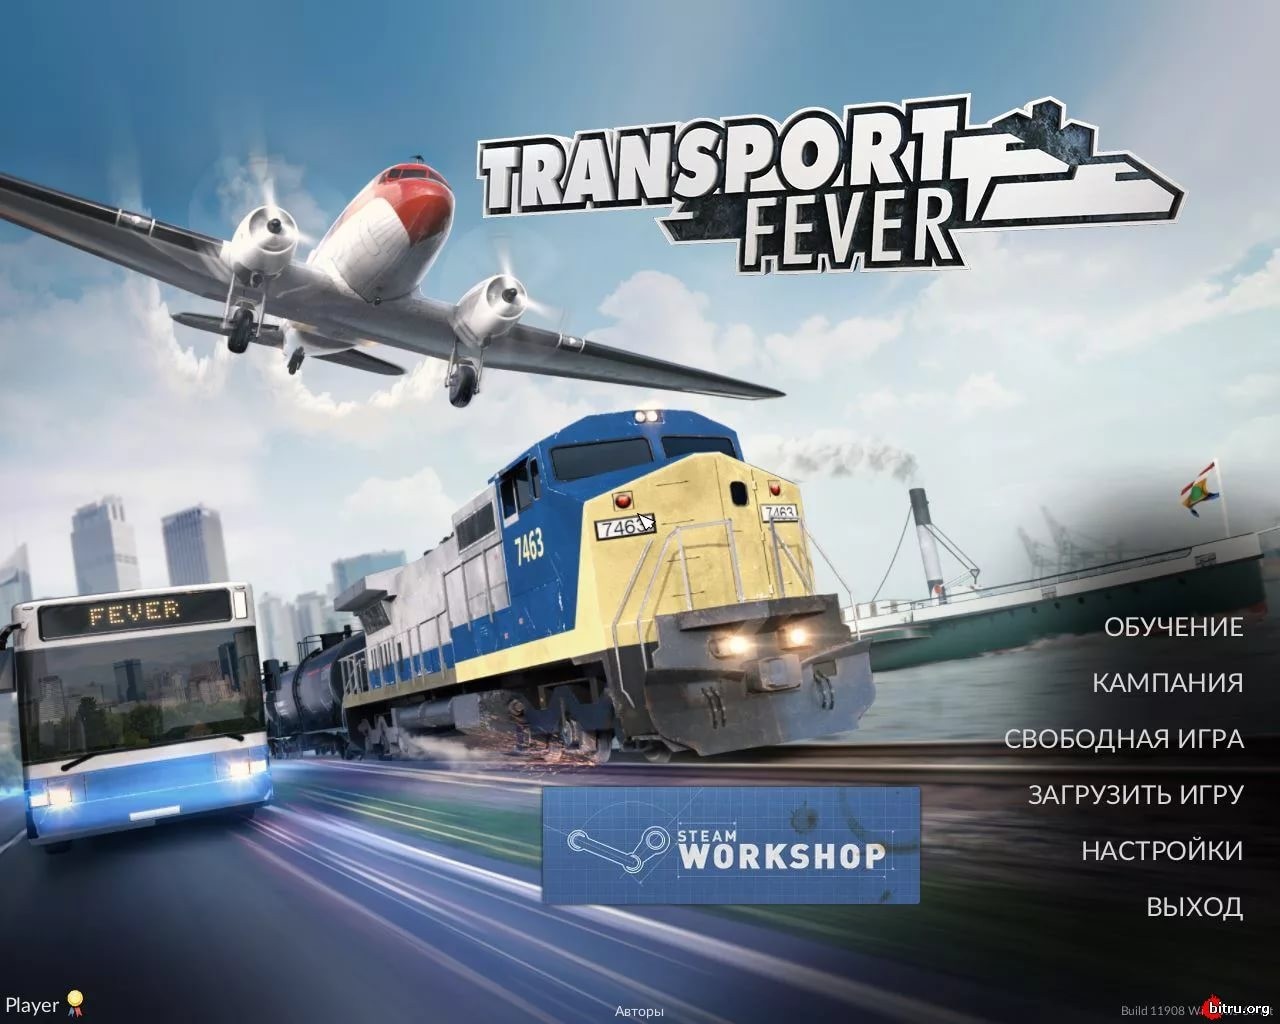 Транспорт февер. Transport игра. Игра " transport giant". Transport Fever, 2016.